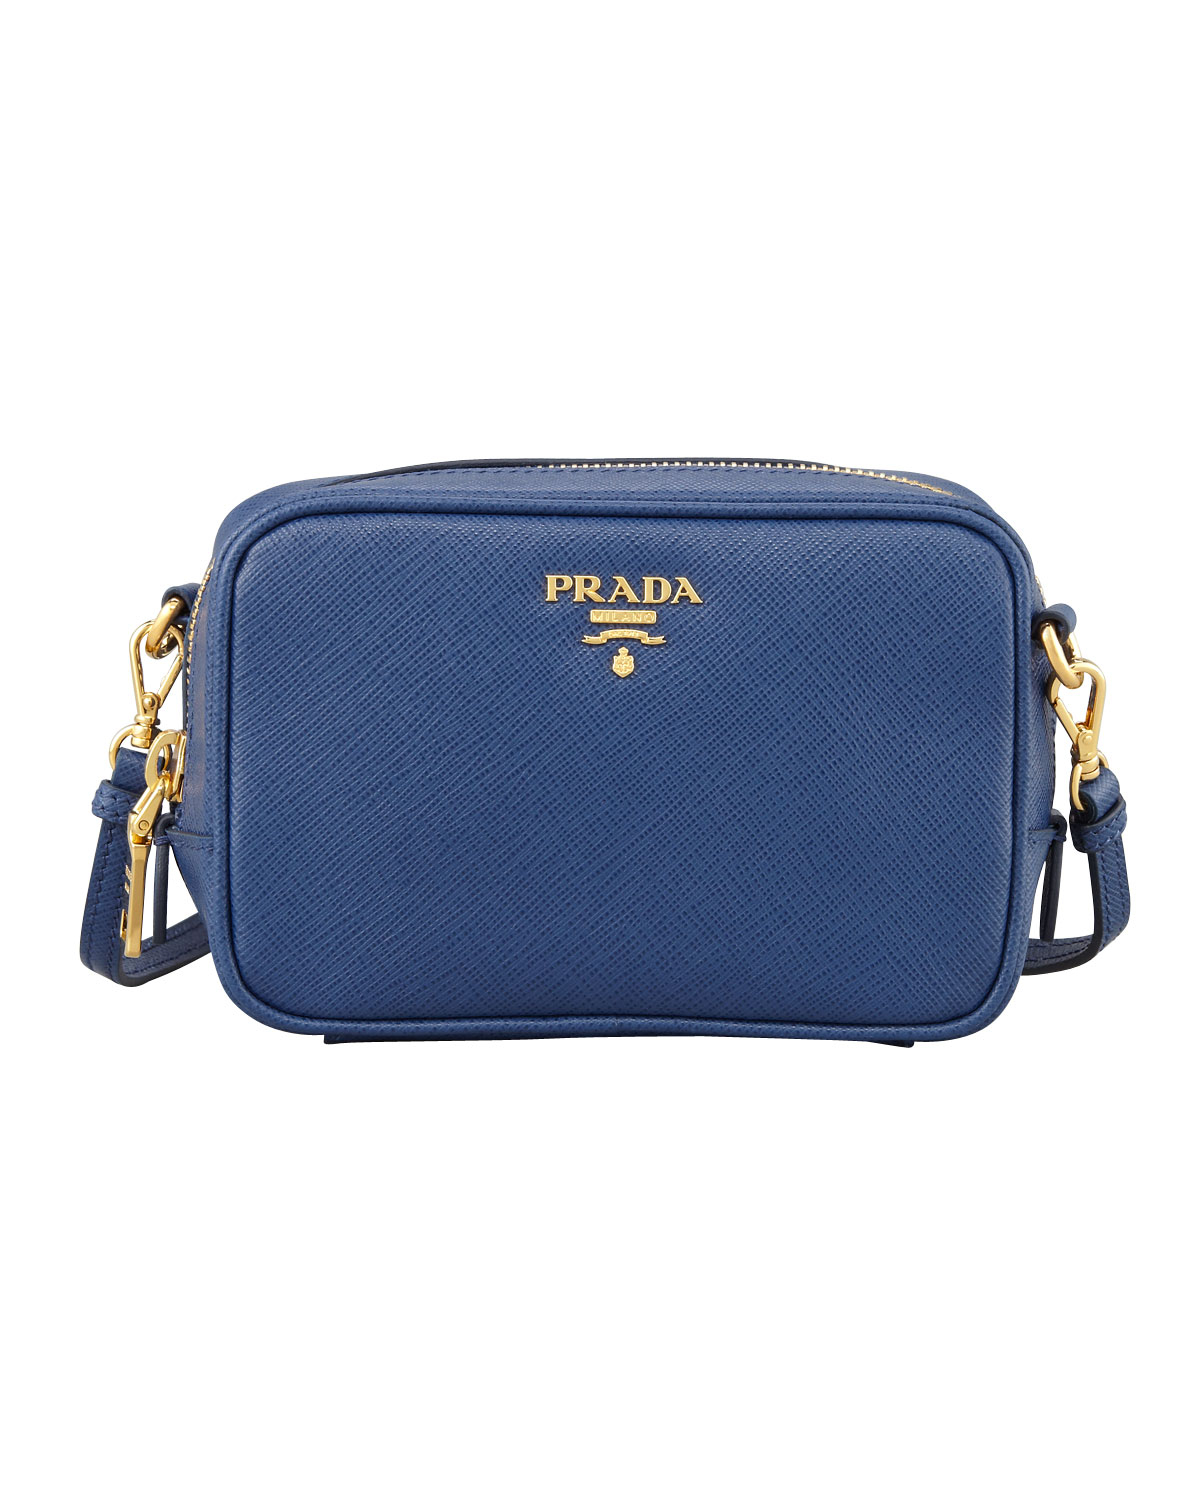 Prada Saffiano Mini Zip Crossbody Bag in Blue | Lyst